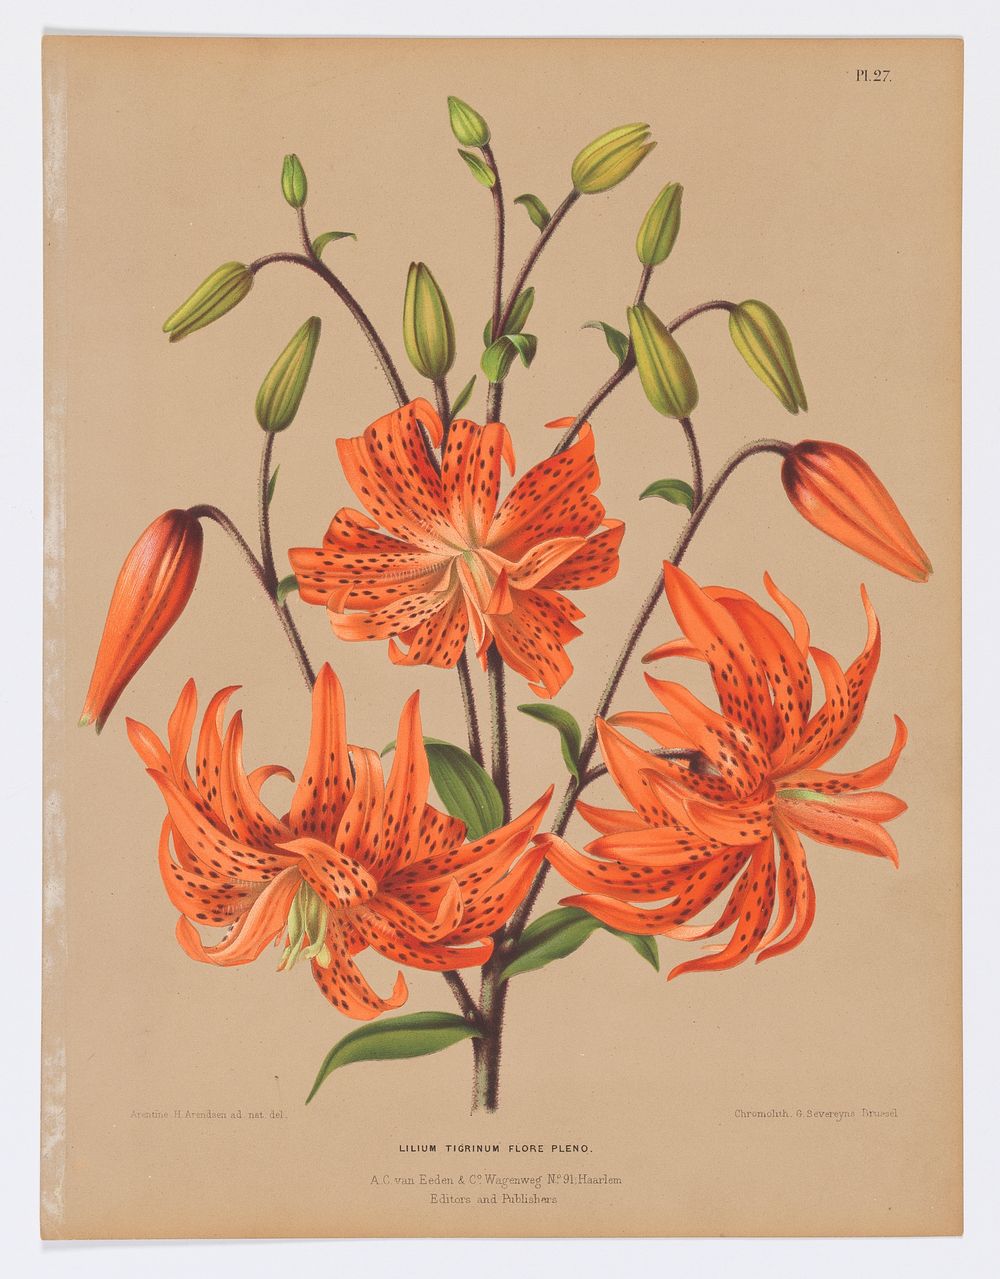 Lilium Tigrinum Flore Pleno, Plate 27 from A. C. Van Eeden's "Flora of Haarlem"